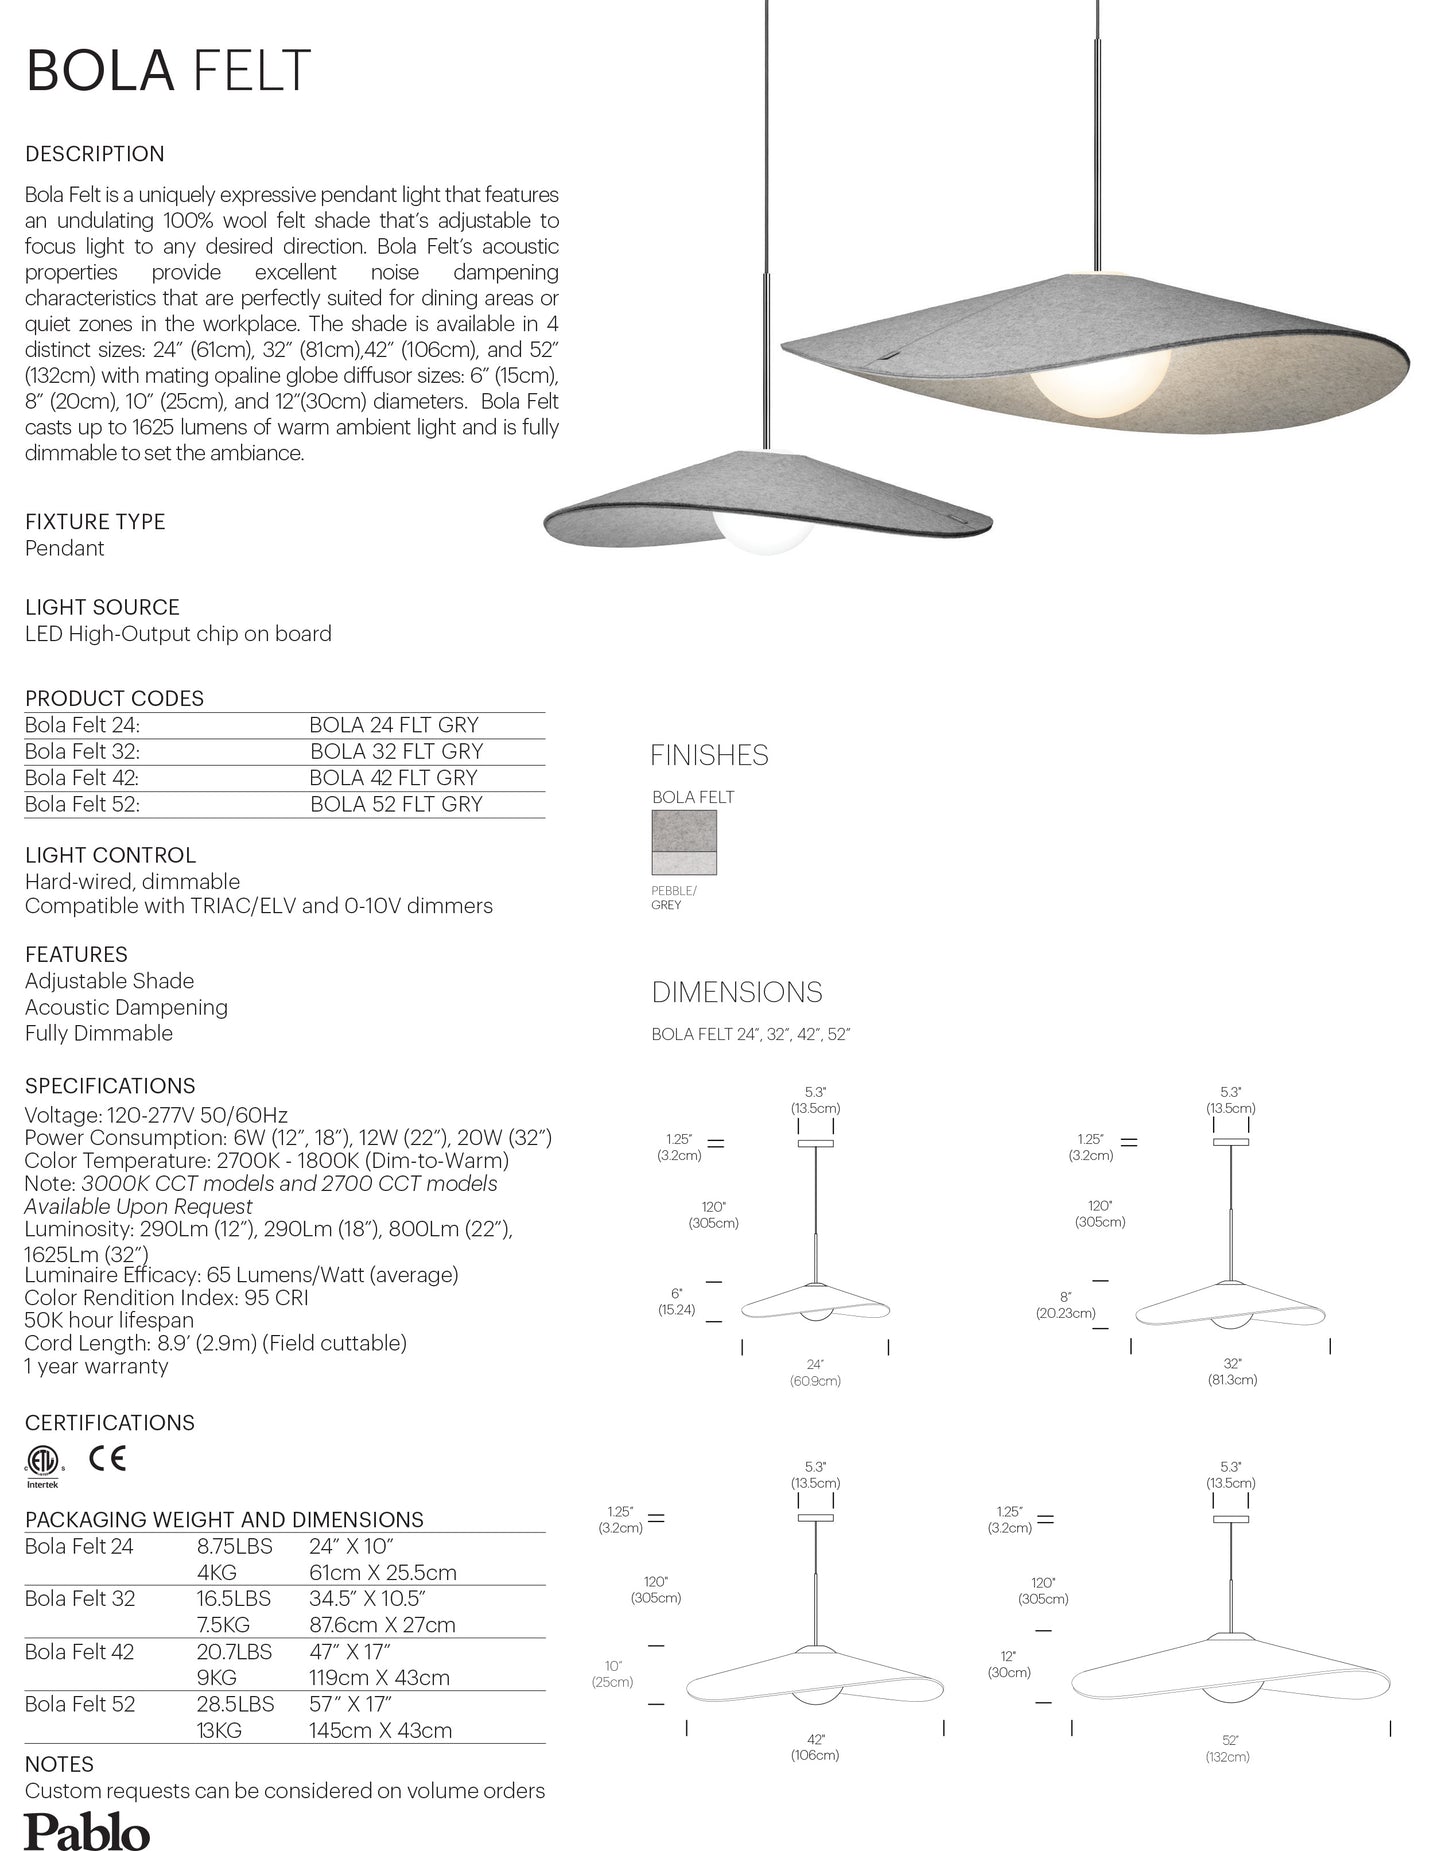 Pablo Designs Bola Felt 24" Pendant Light | Loftmodern 15